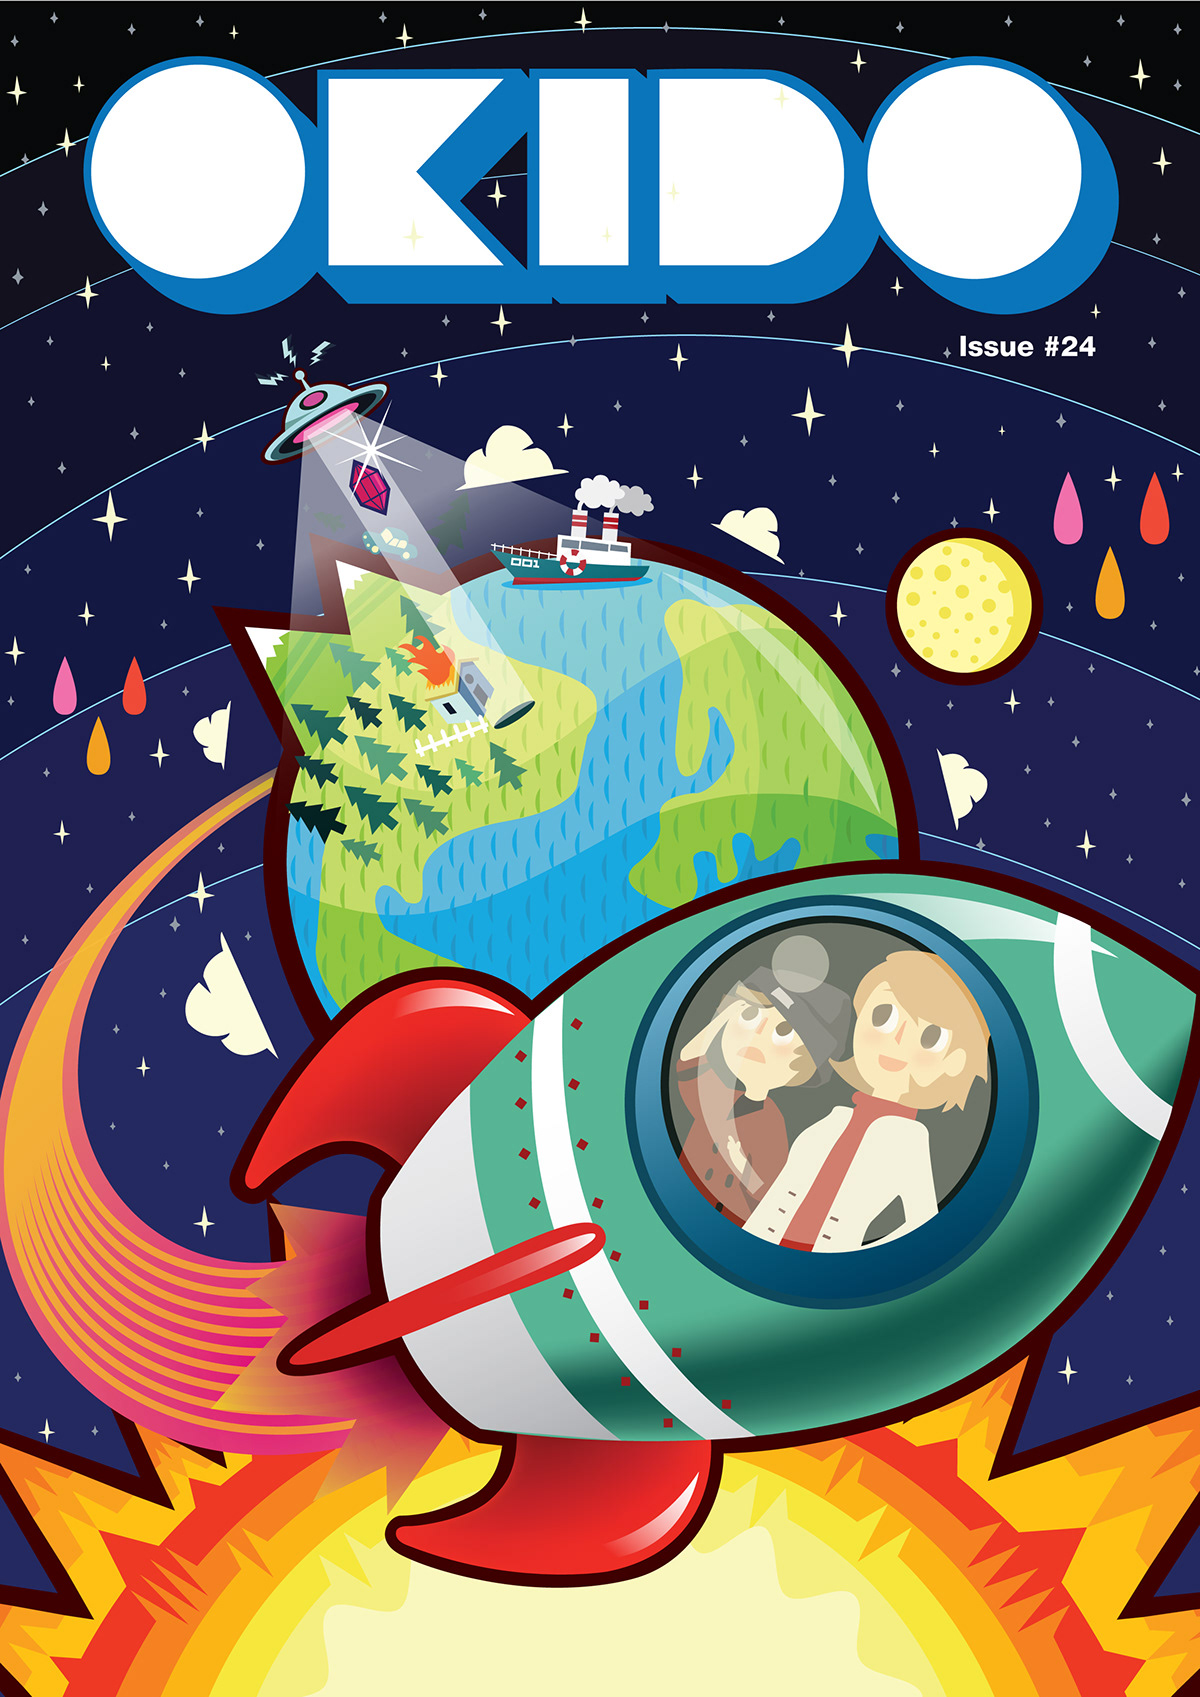 universe outer space alien rocket cover design Magazine Cover